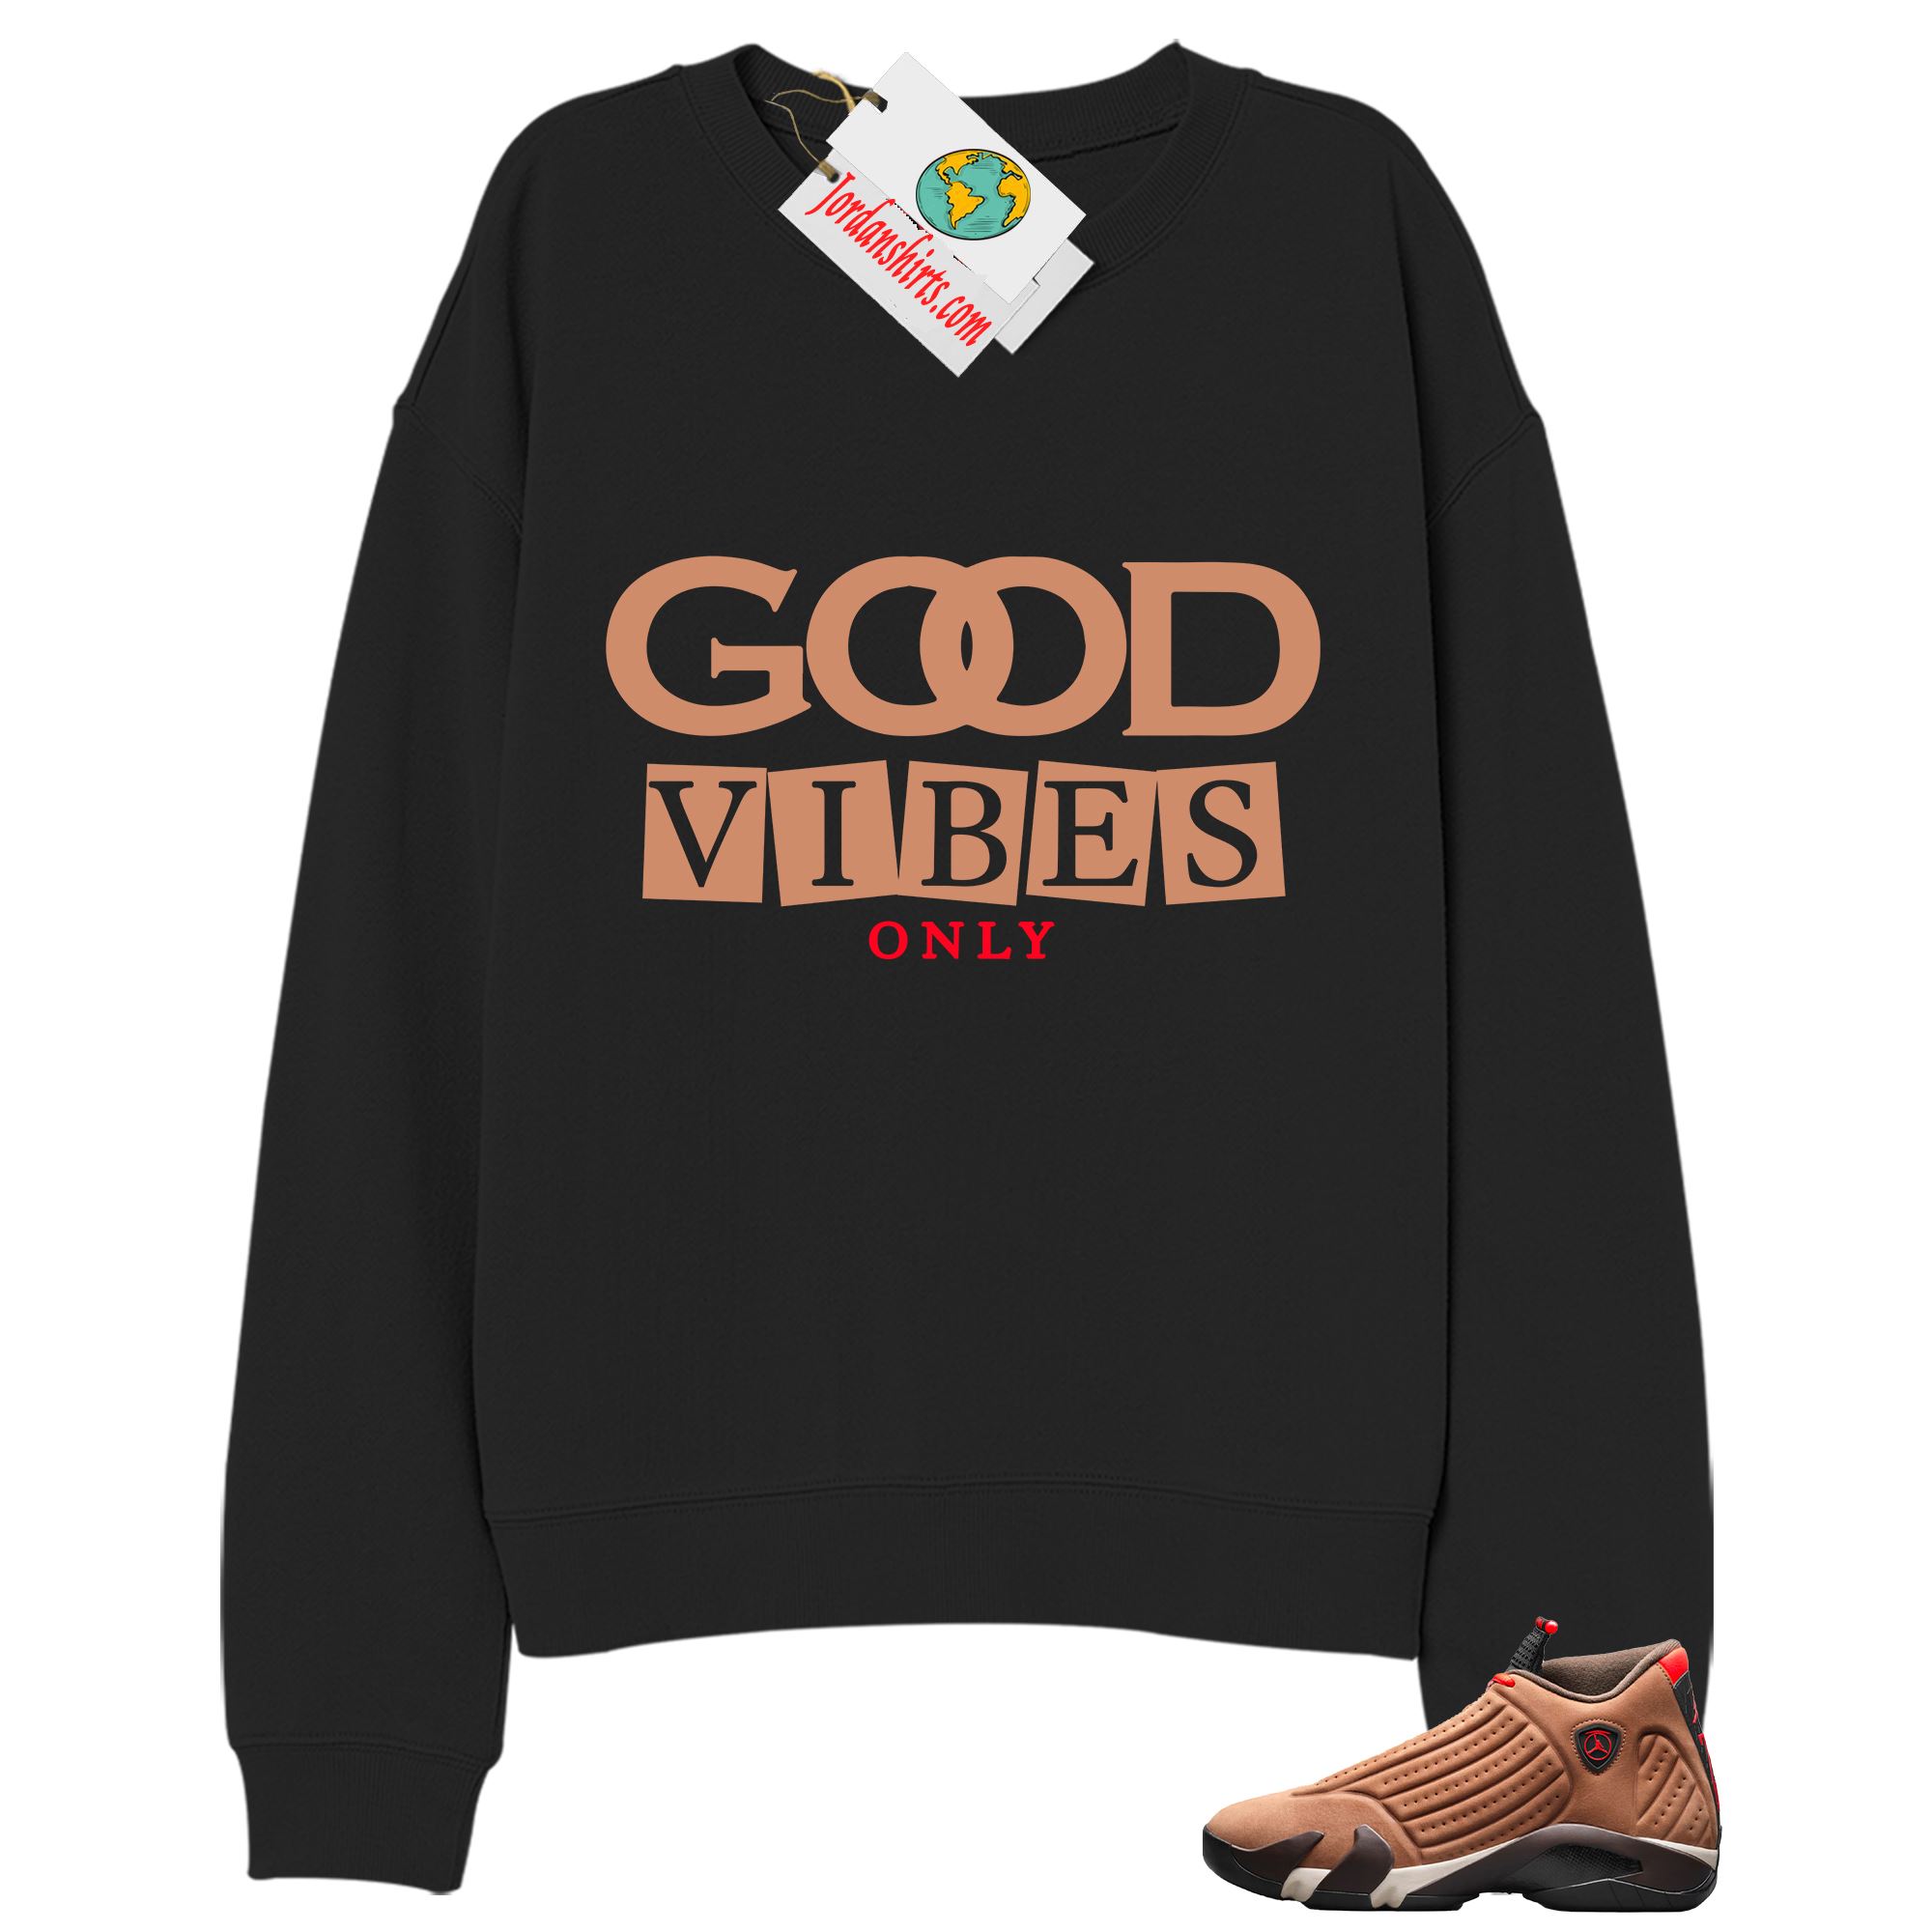 Jordan 14 Sweatshirt, Good Vibes Only Black Sweatshirt Air Jordan 14 Winterized 14s Plus Size Up To 5xl